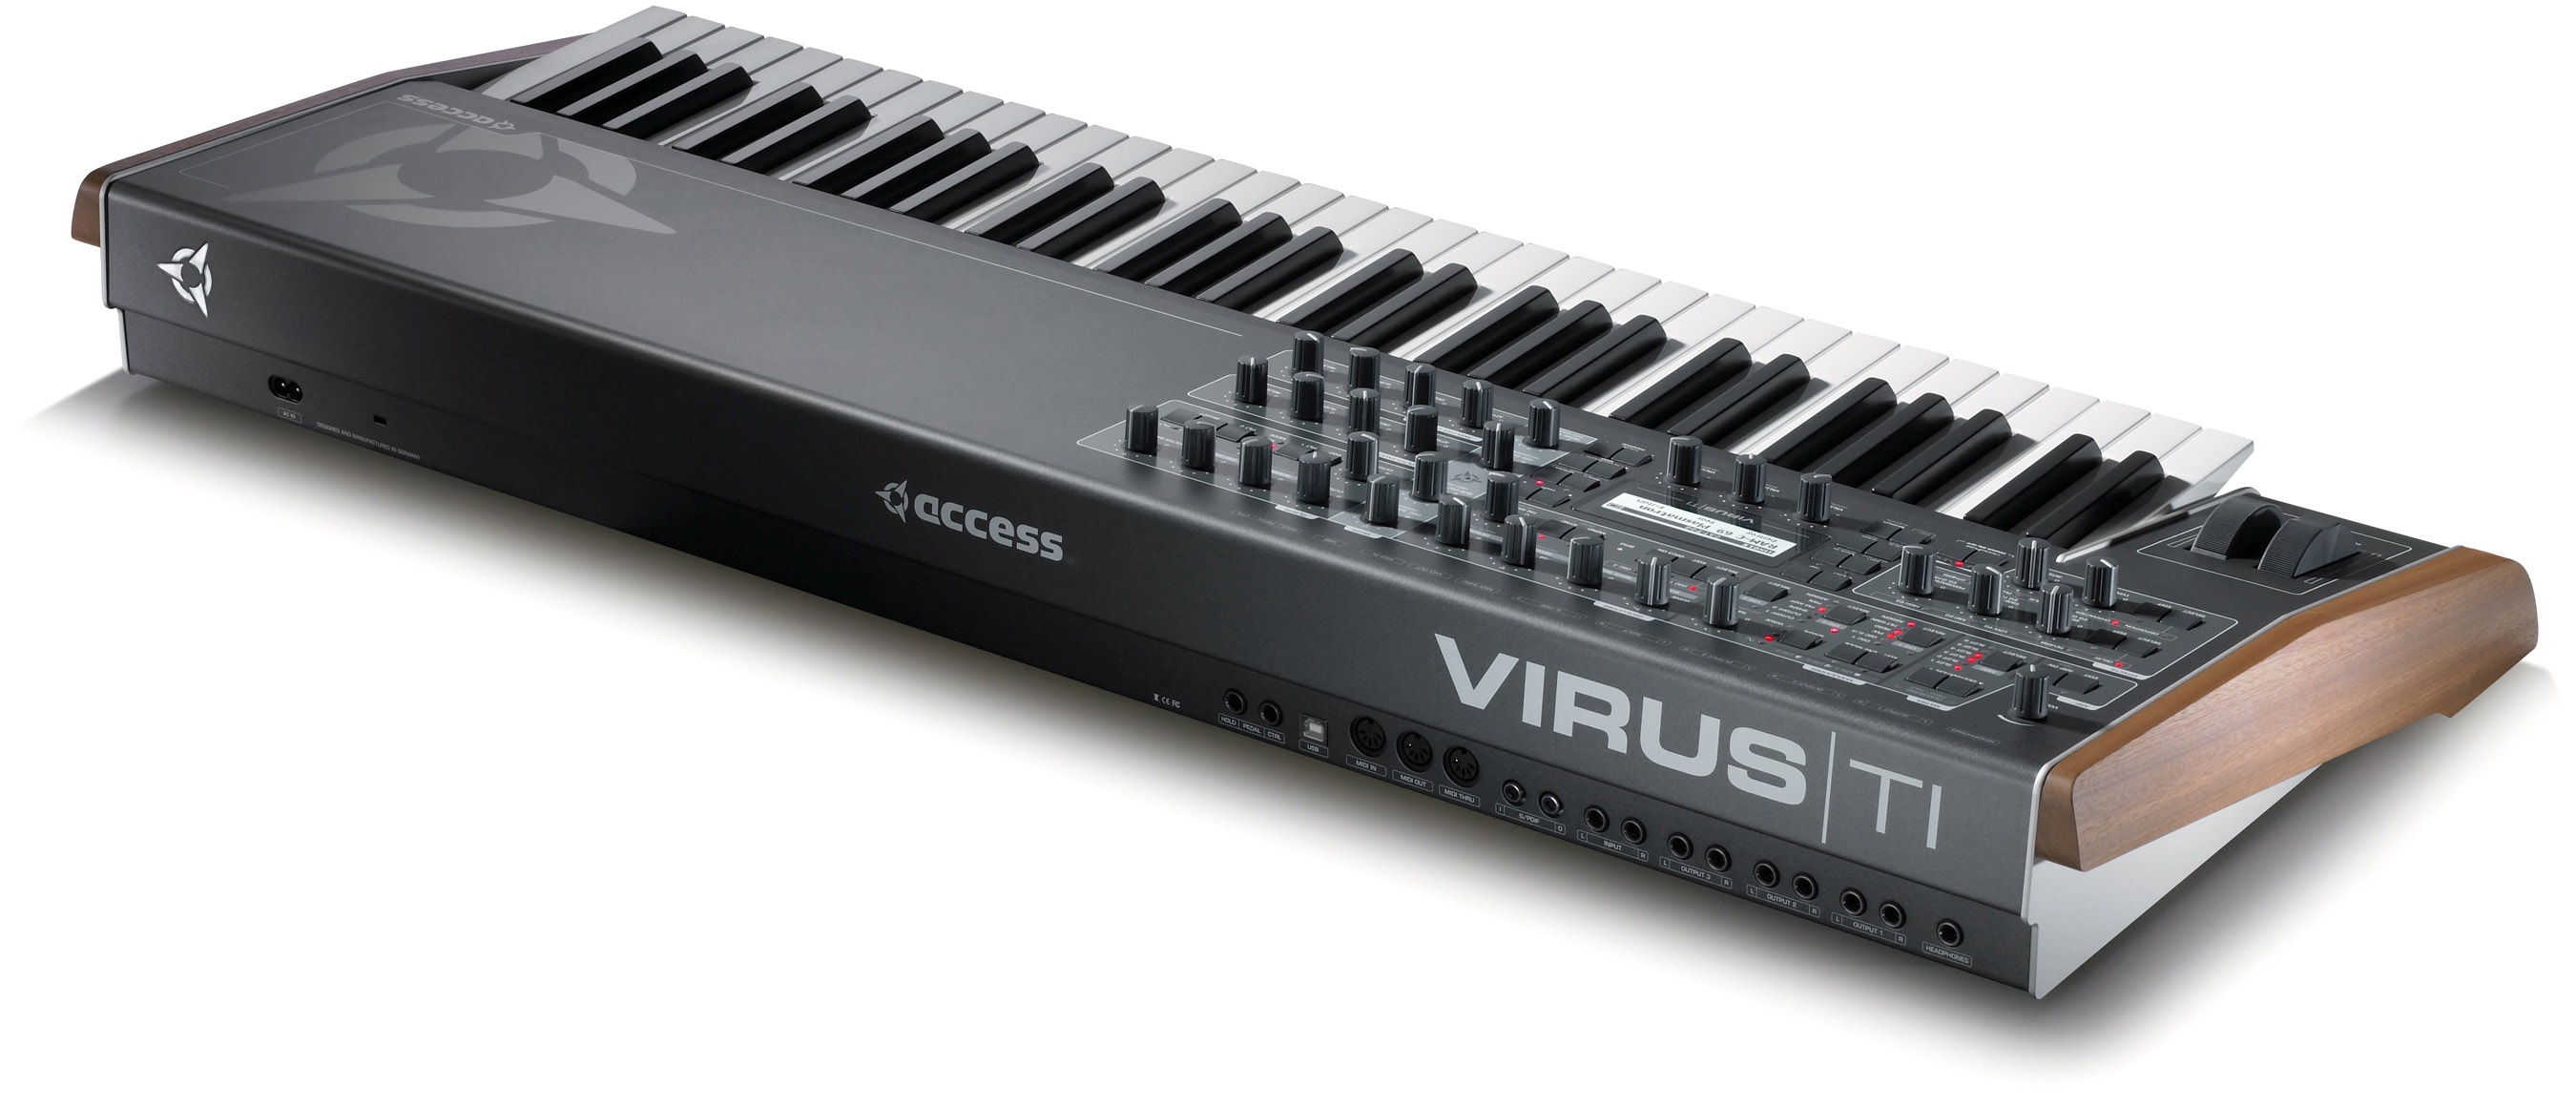 Access virus. Синтезатор virus ti. Синтезатор access virus Keyboard. Access virus ti2. Access virus ti Keyboard.